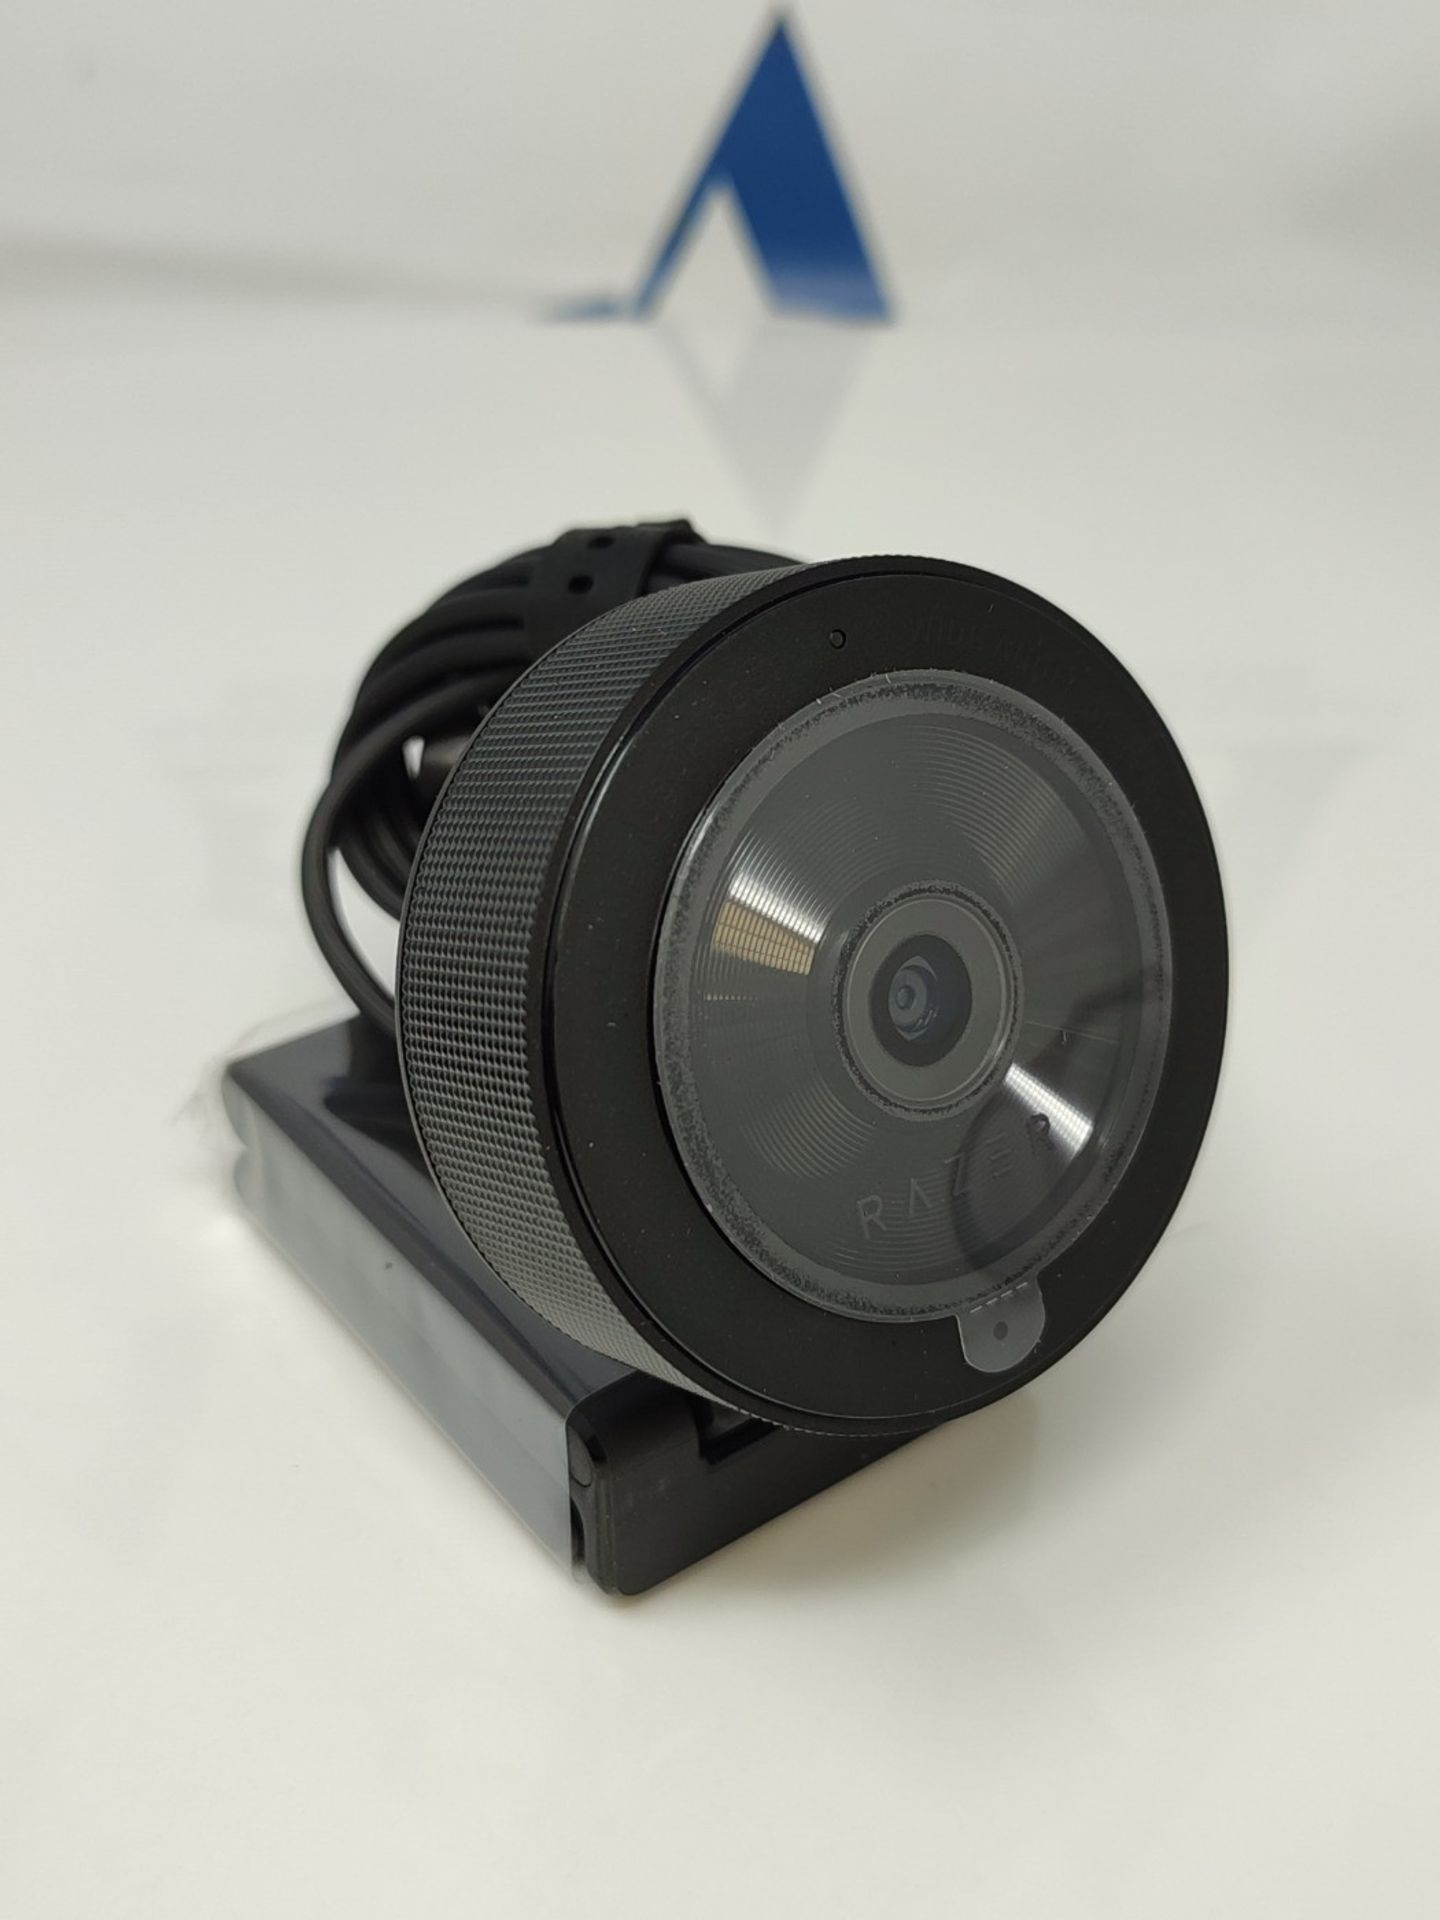 Razer Kiyo X - USB webcam for full HD streaming - 1080p Full HD - auto focus - black - Image 3 of 3